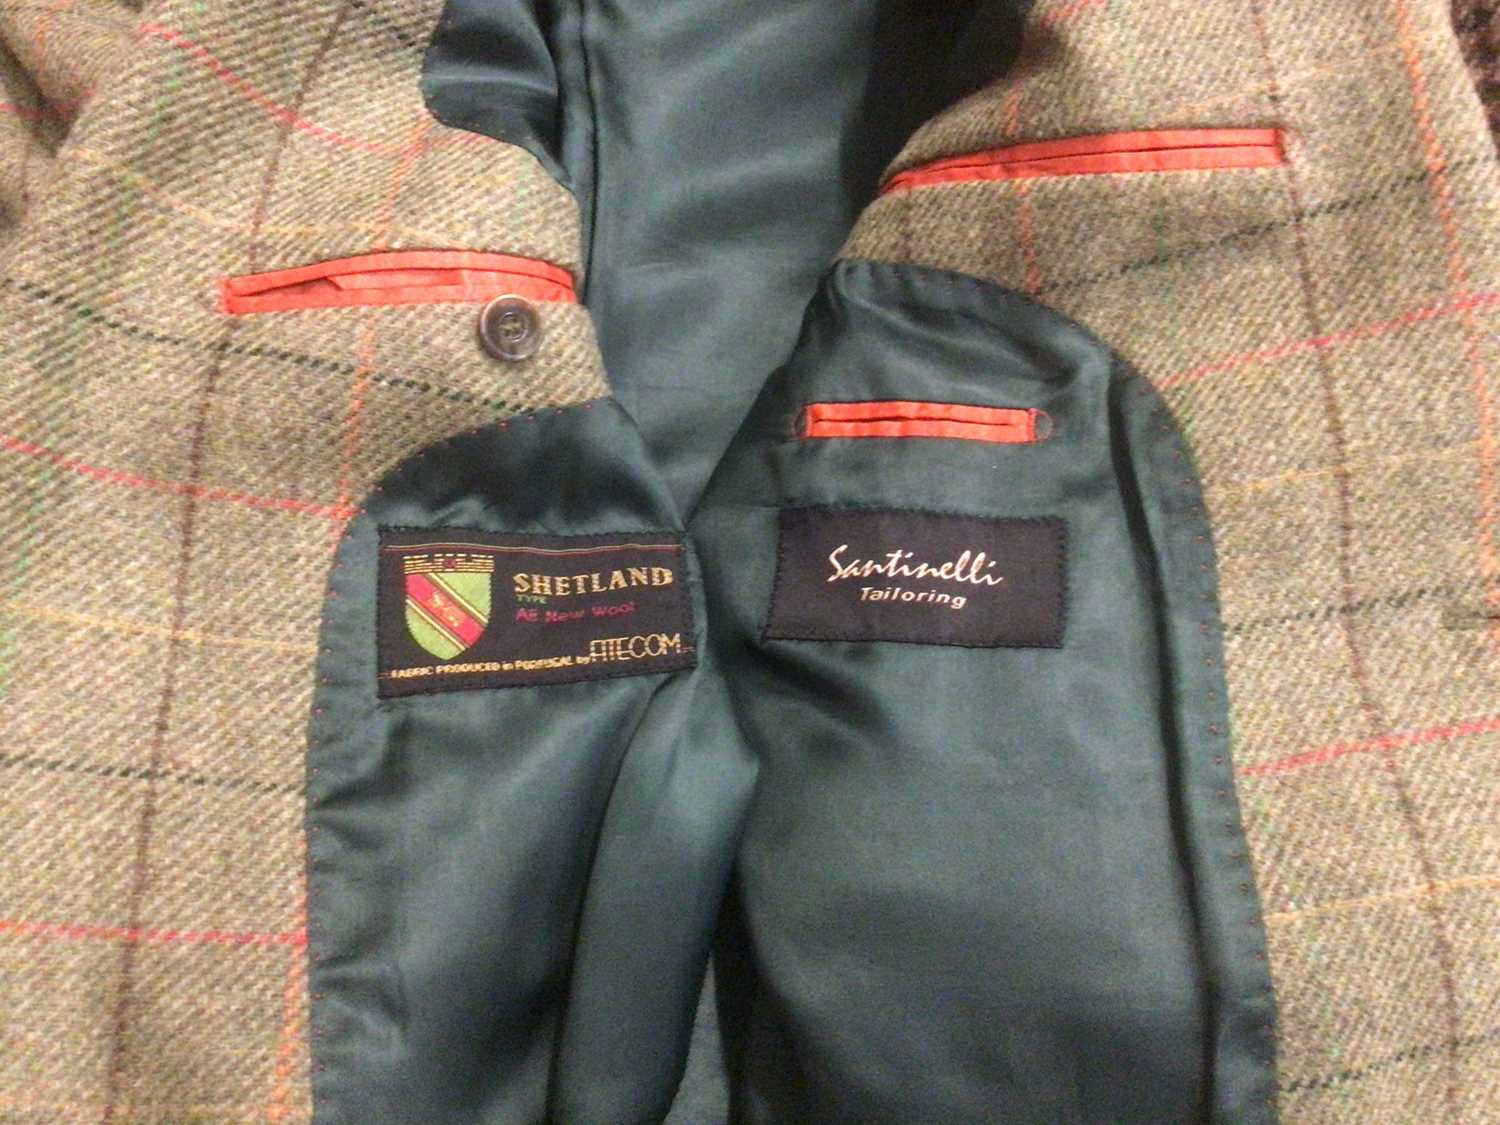 Gentlemen's wool tweed jackets makes include The Highlands, Santinelli Shetland, Andre Balzac Tweedl - Image 3 of 6